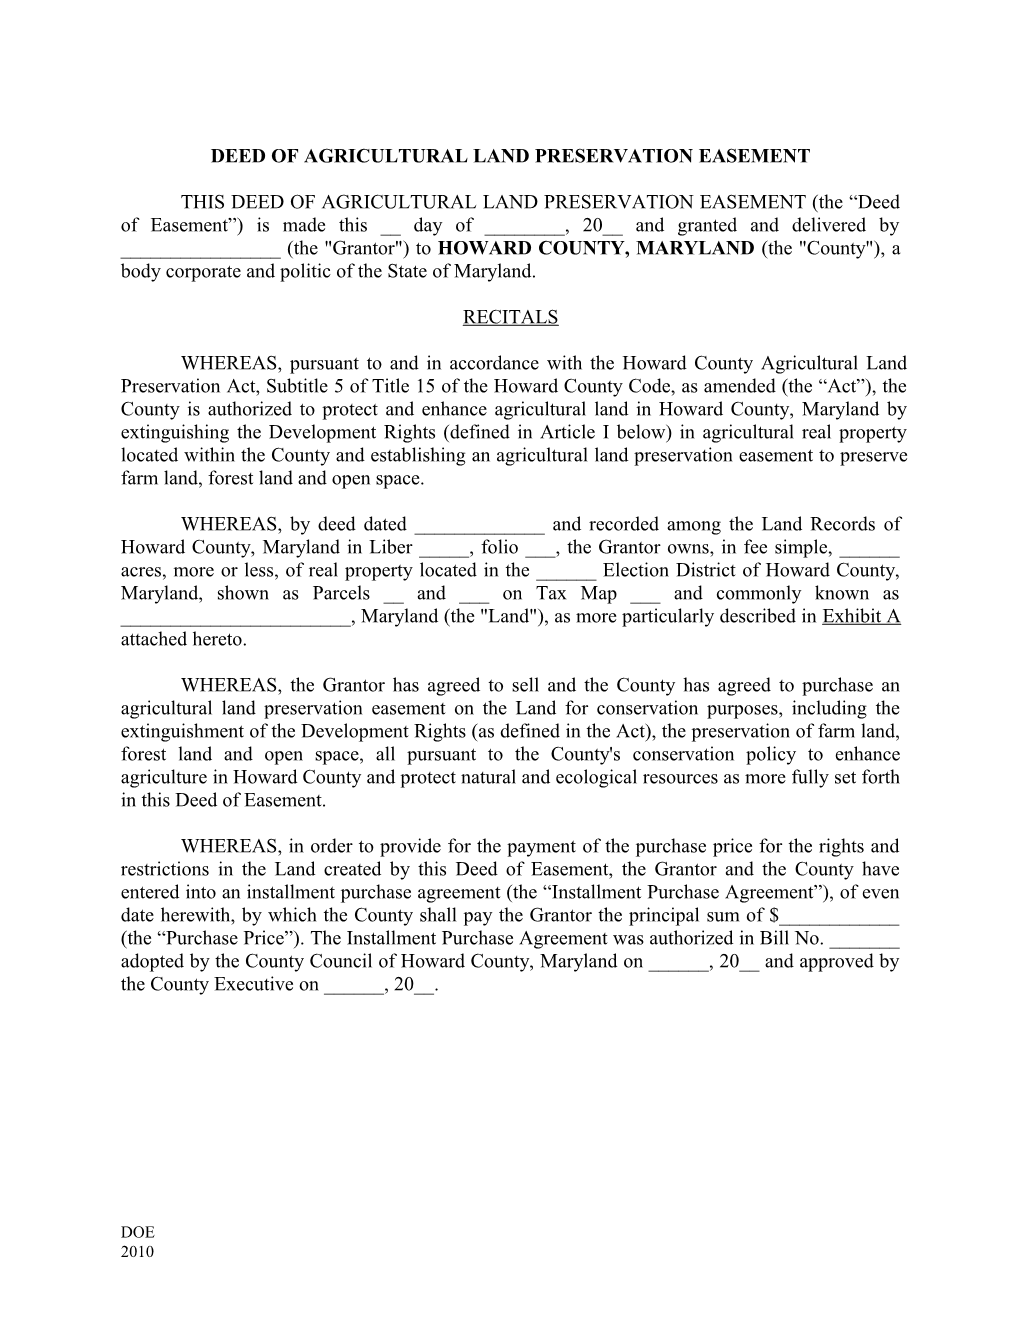 Deed of Agricultural Land Preservation Easement